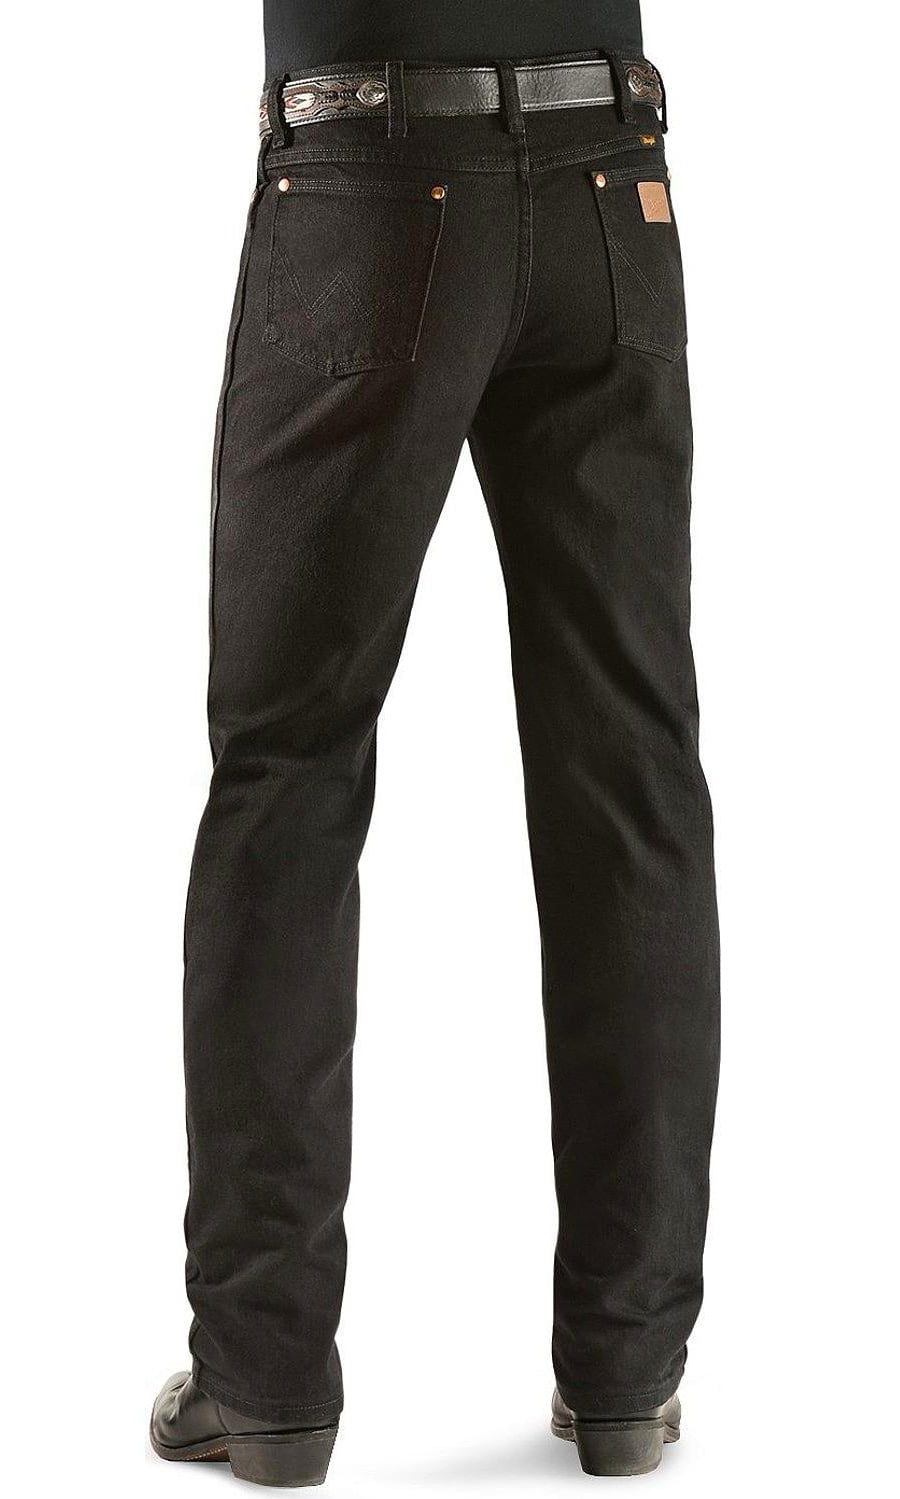 Wrangler Men's Cowboy cut Slim Fit Jean,shadow black,31x36 - Walmart.com